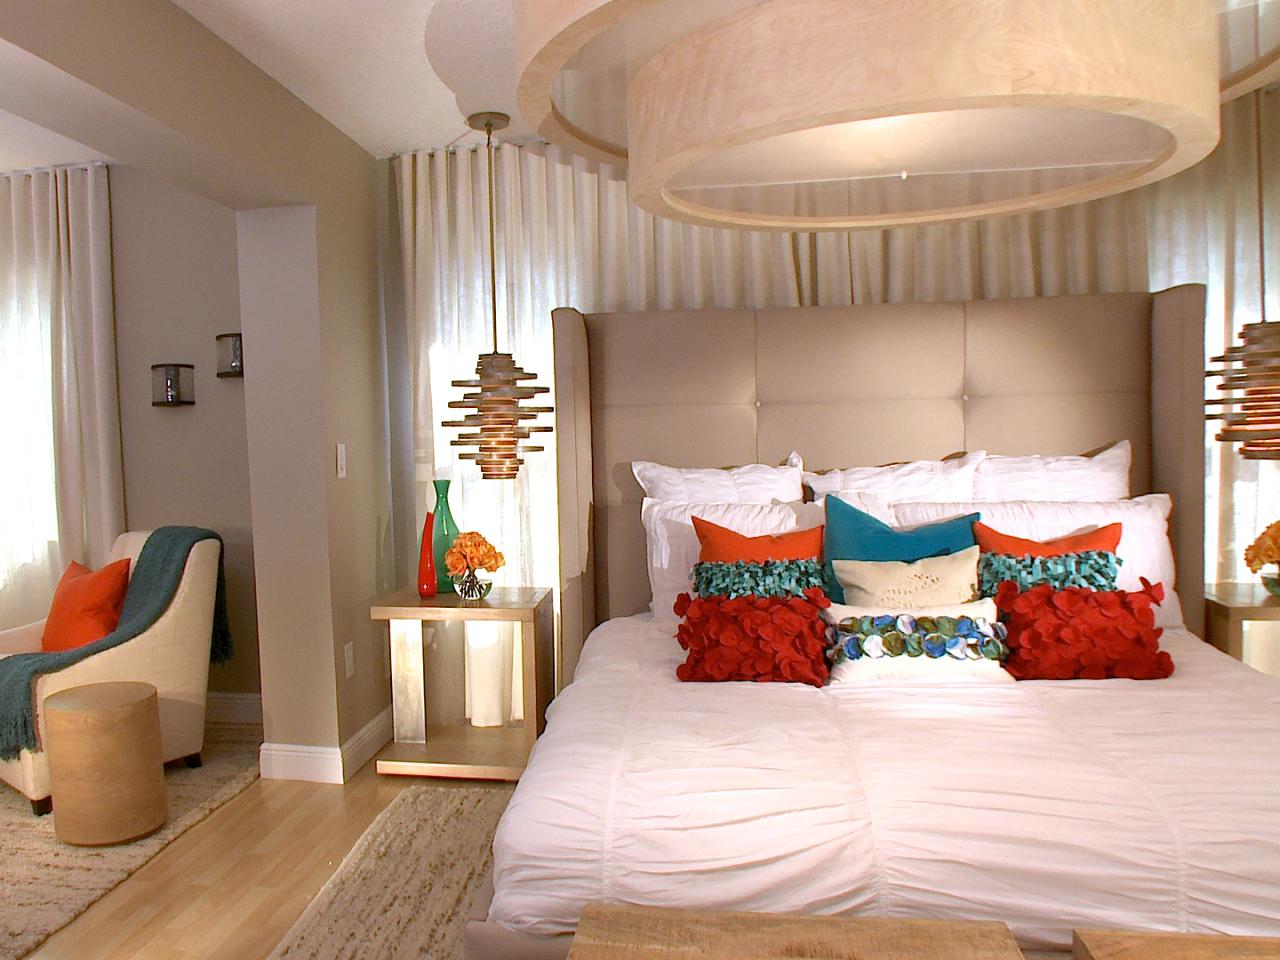 27 Best Hot bedroom decorating ideas 